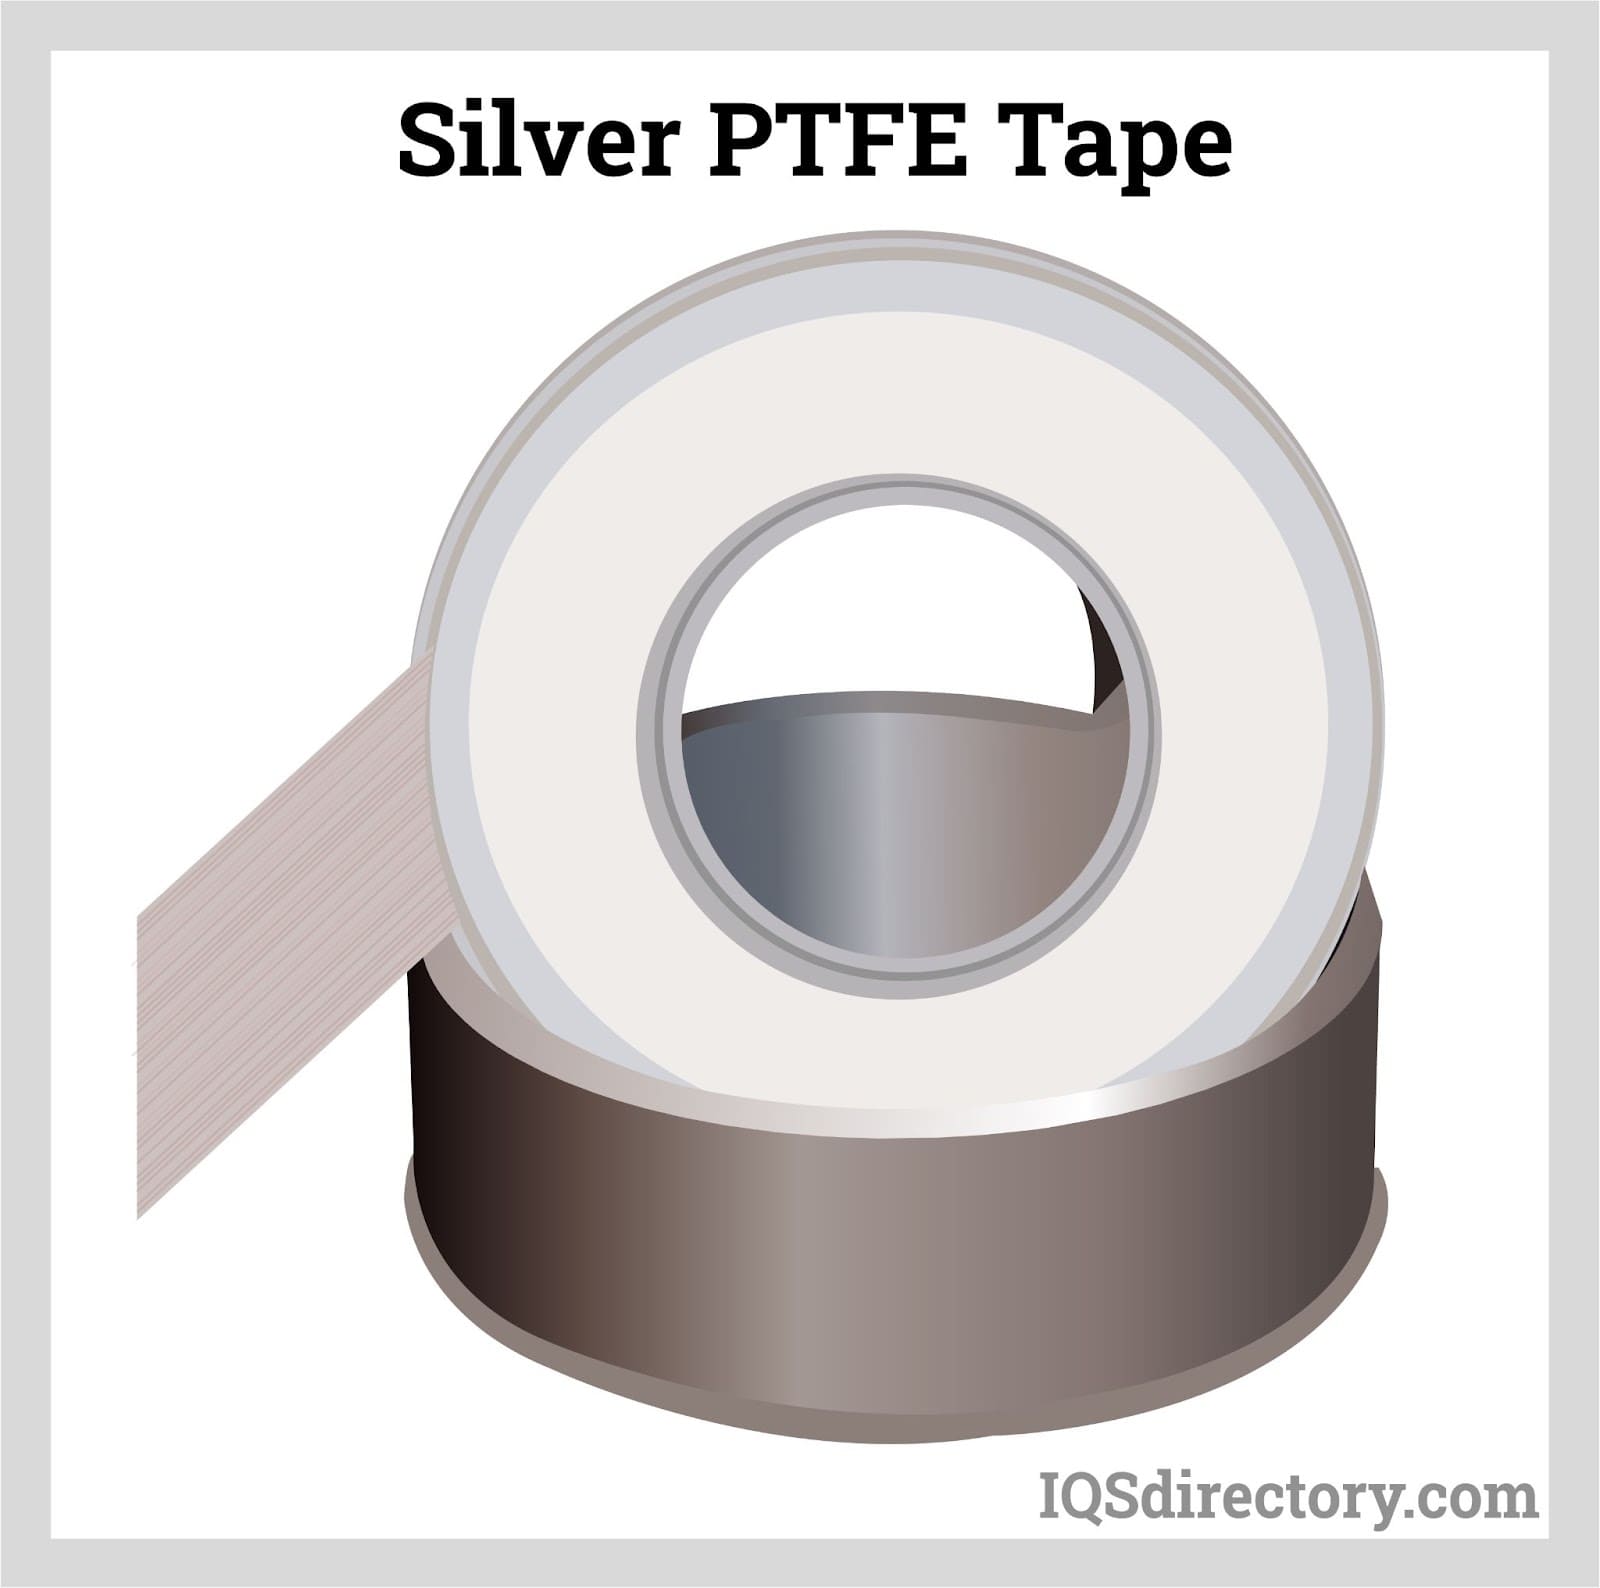 Silver PTFE Tape